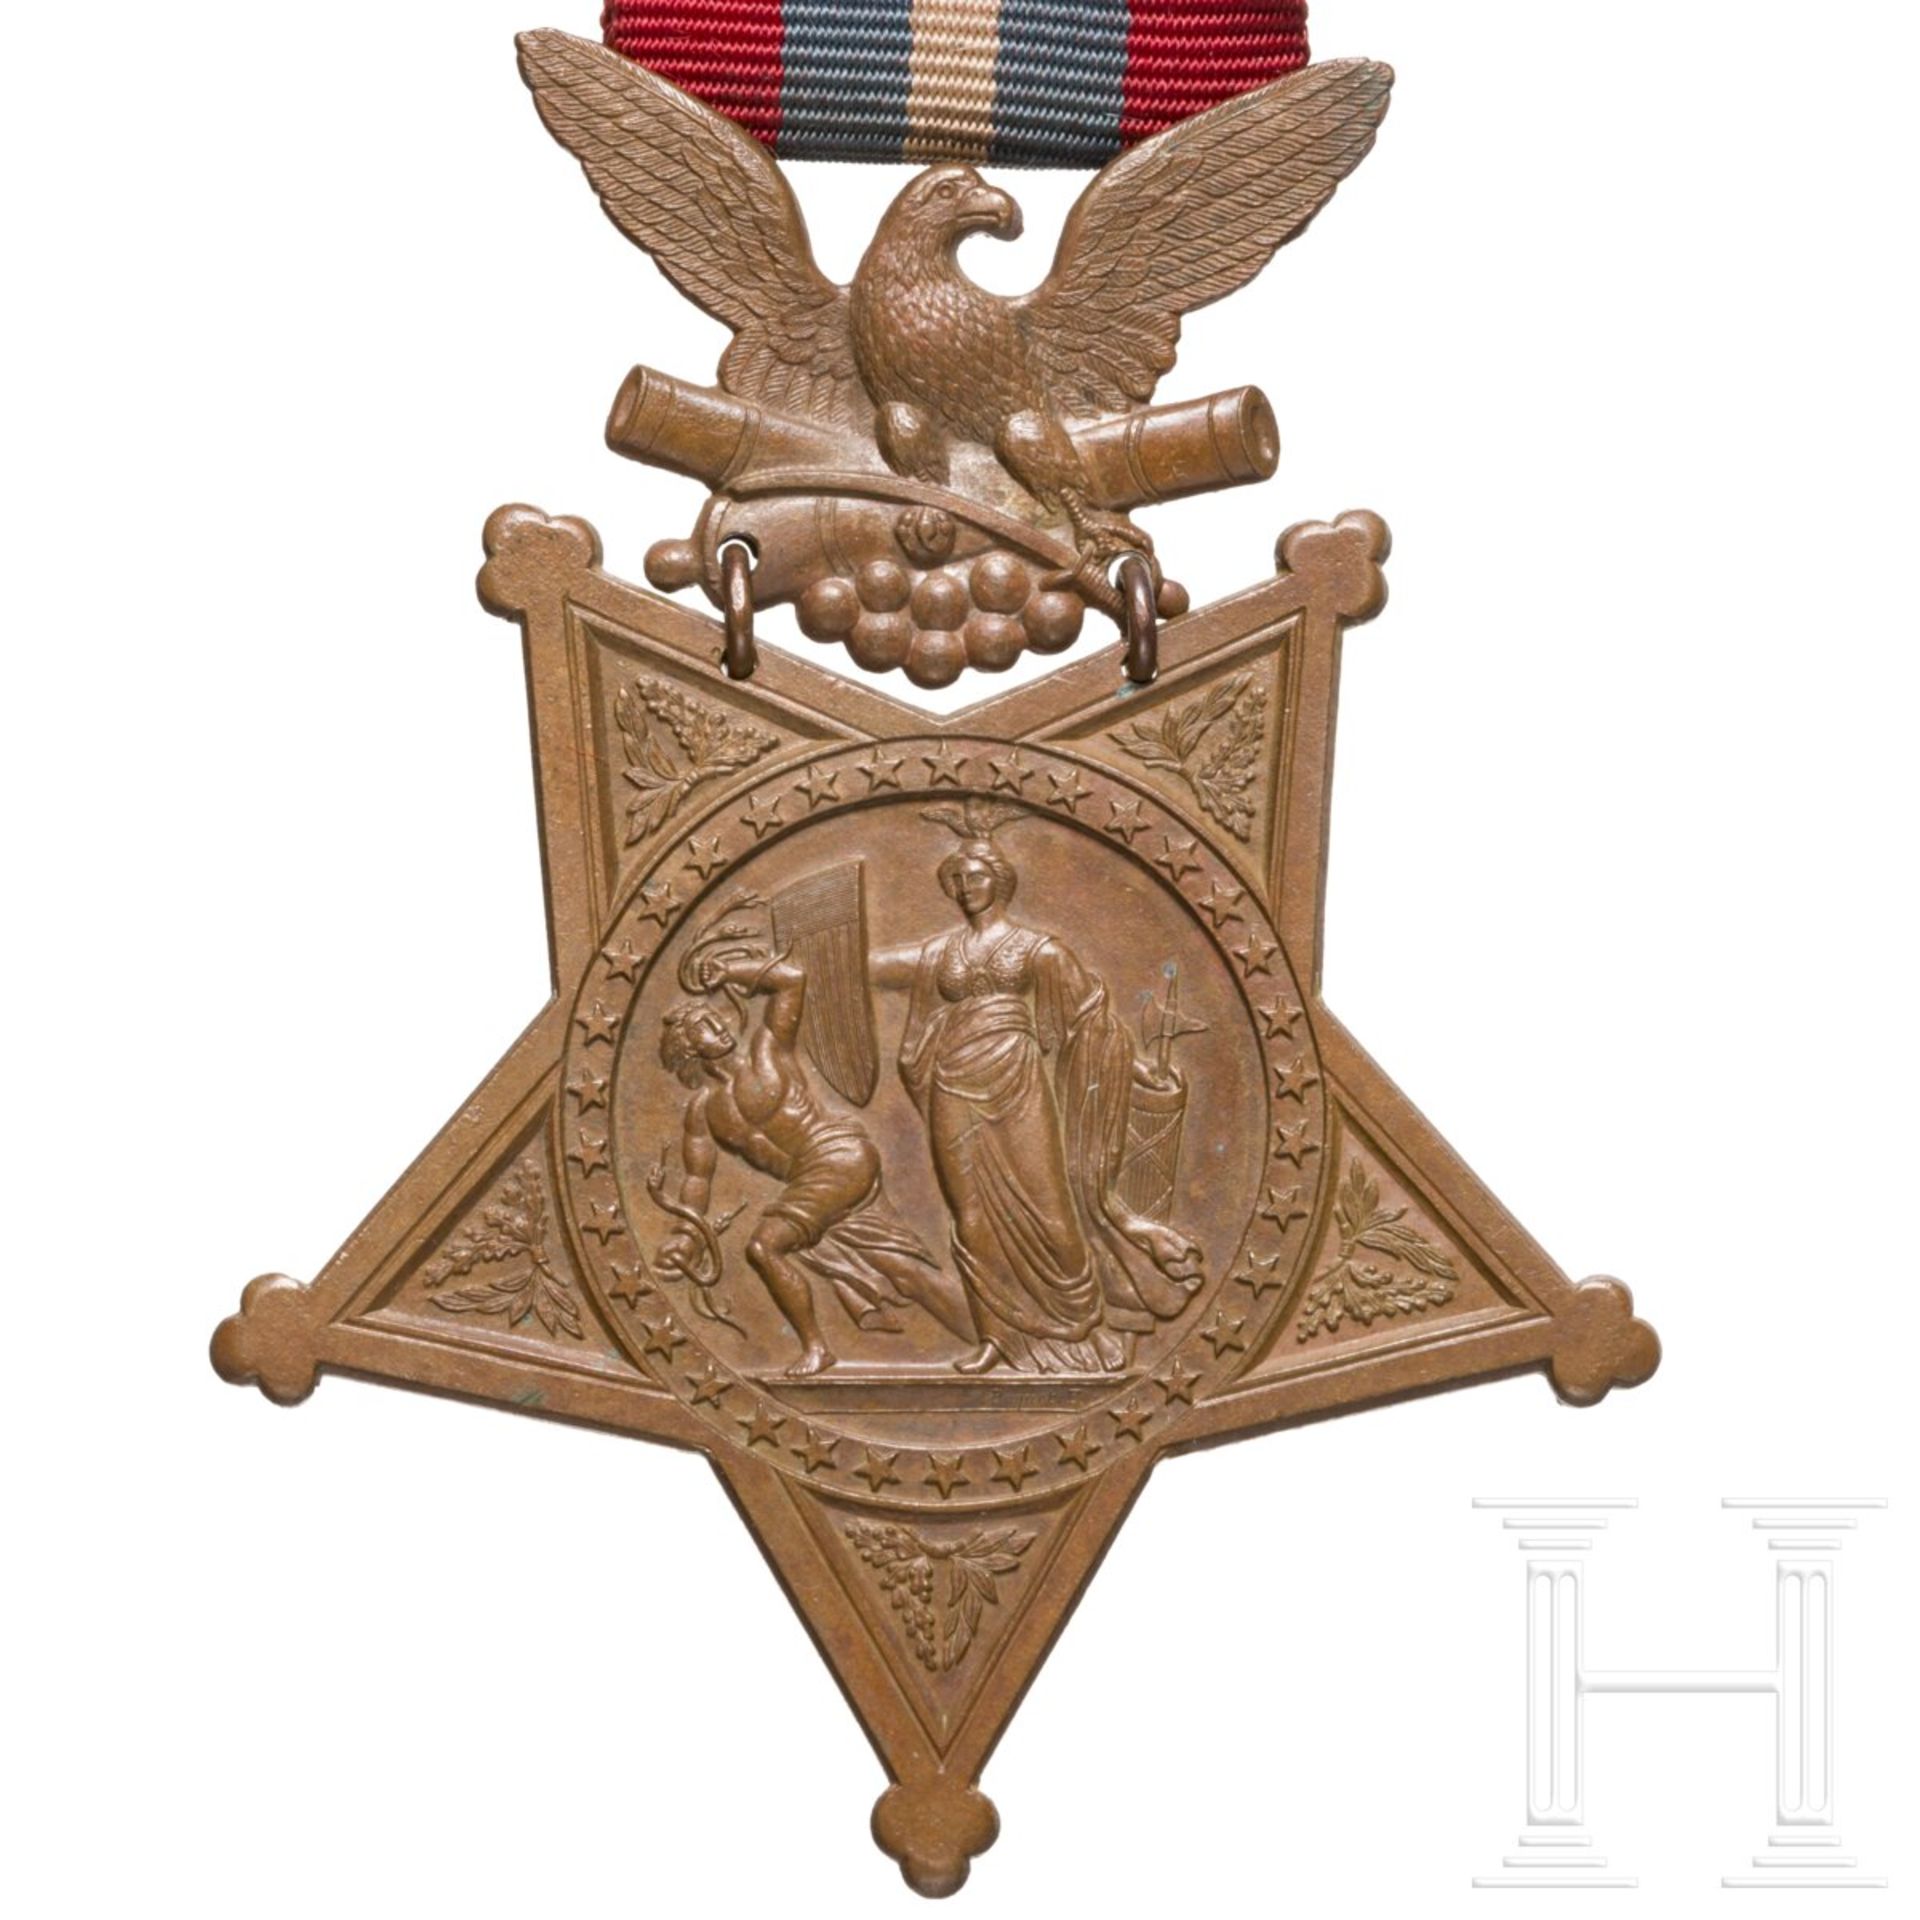 Congressional Medal of Honor in Armeeausführung 1896 - 1904, unverausgabtes Exemplar - Bild 3 aus 3